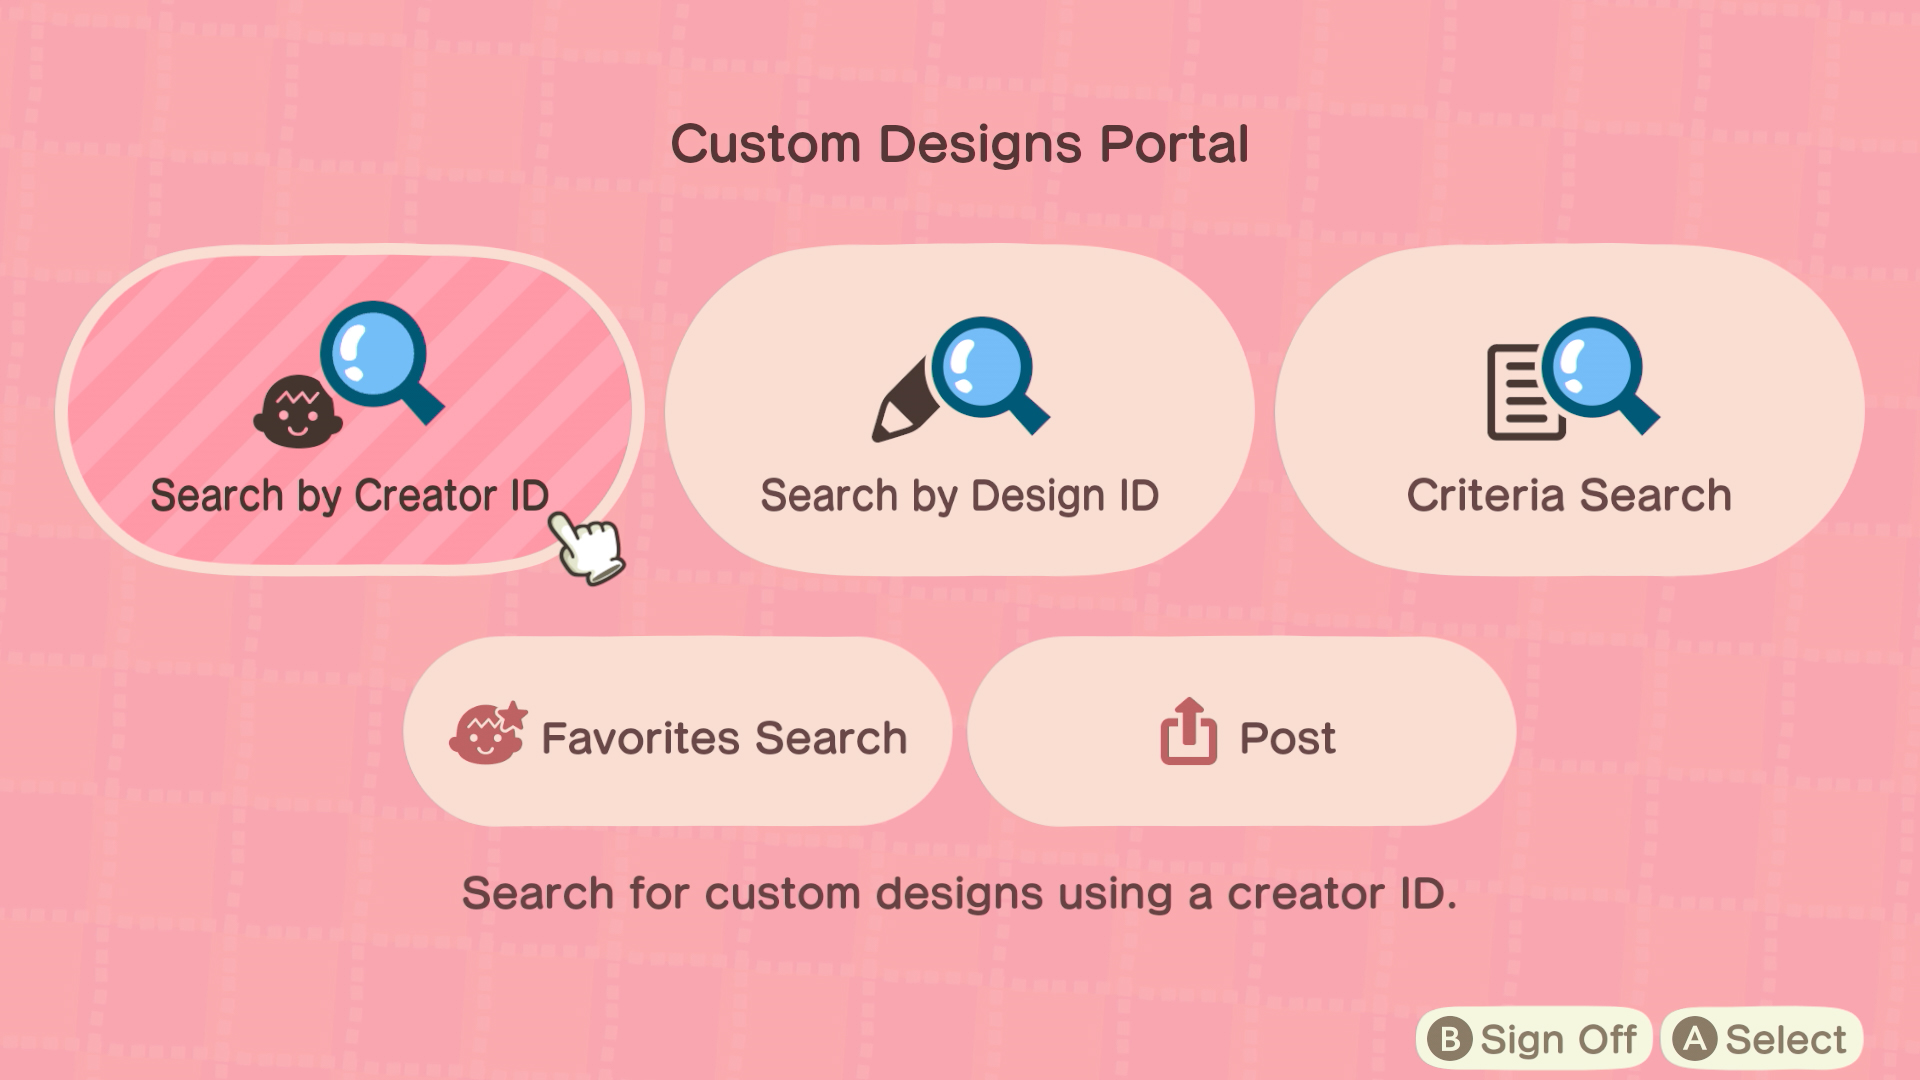 NH Using Custom Designs Portal 1.9.0 Promo.jpg